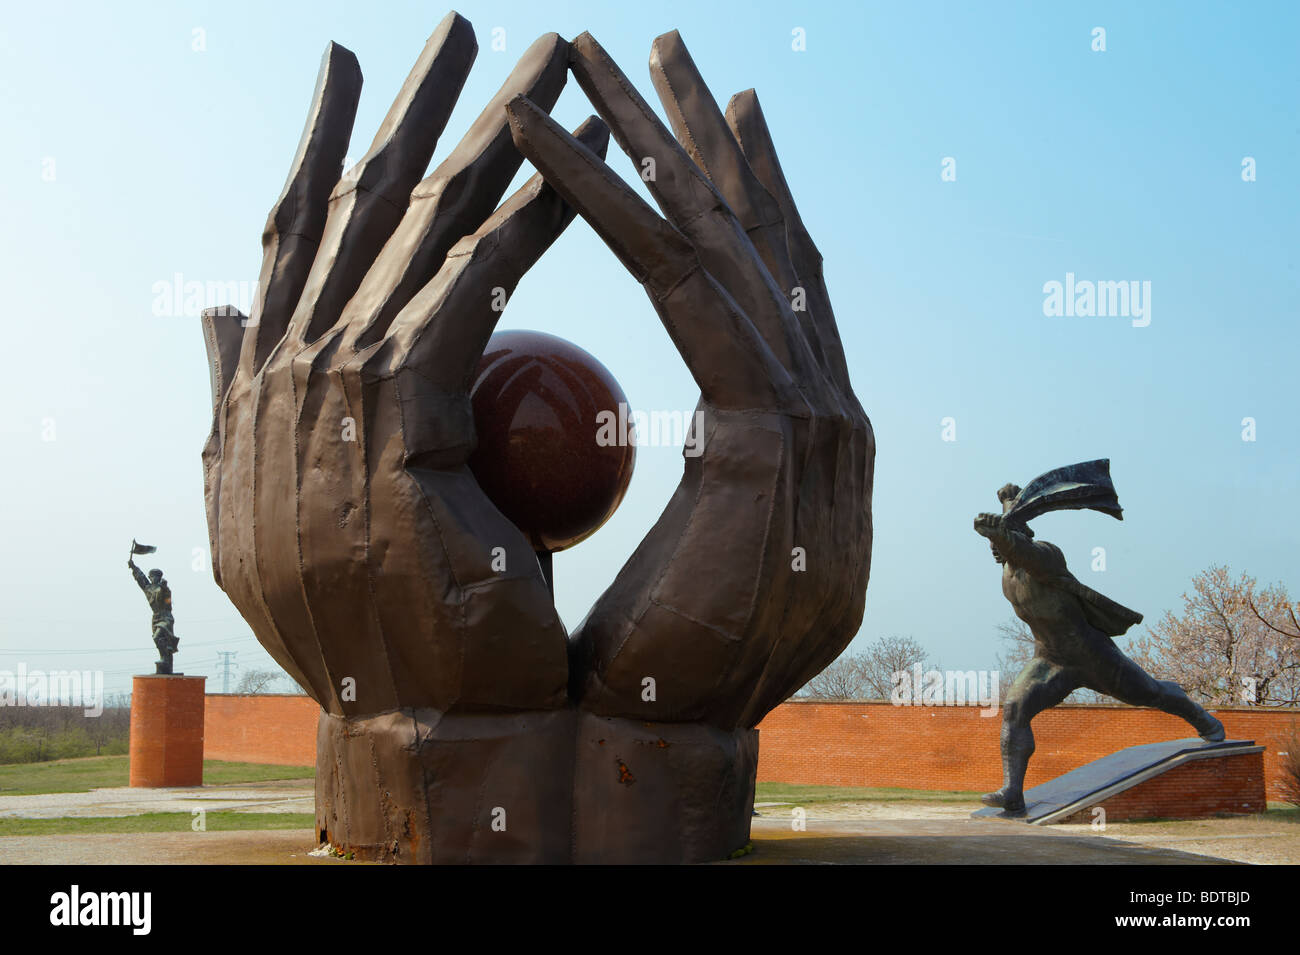 Statua in ricordo di scultura - Parco di sculture comunista museum - Budapest - Ungheria Foto Stock